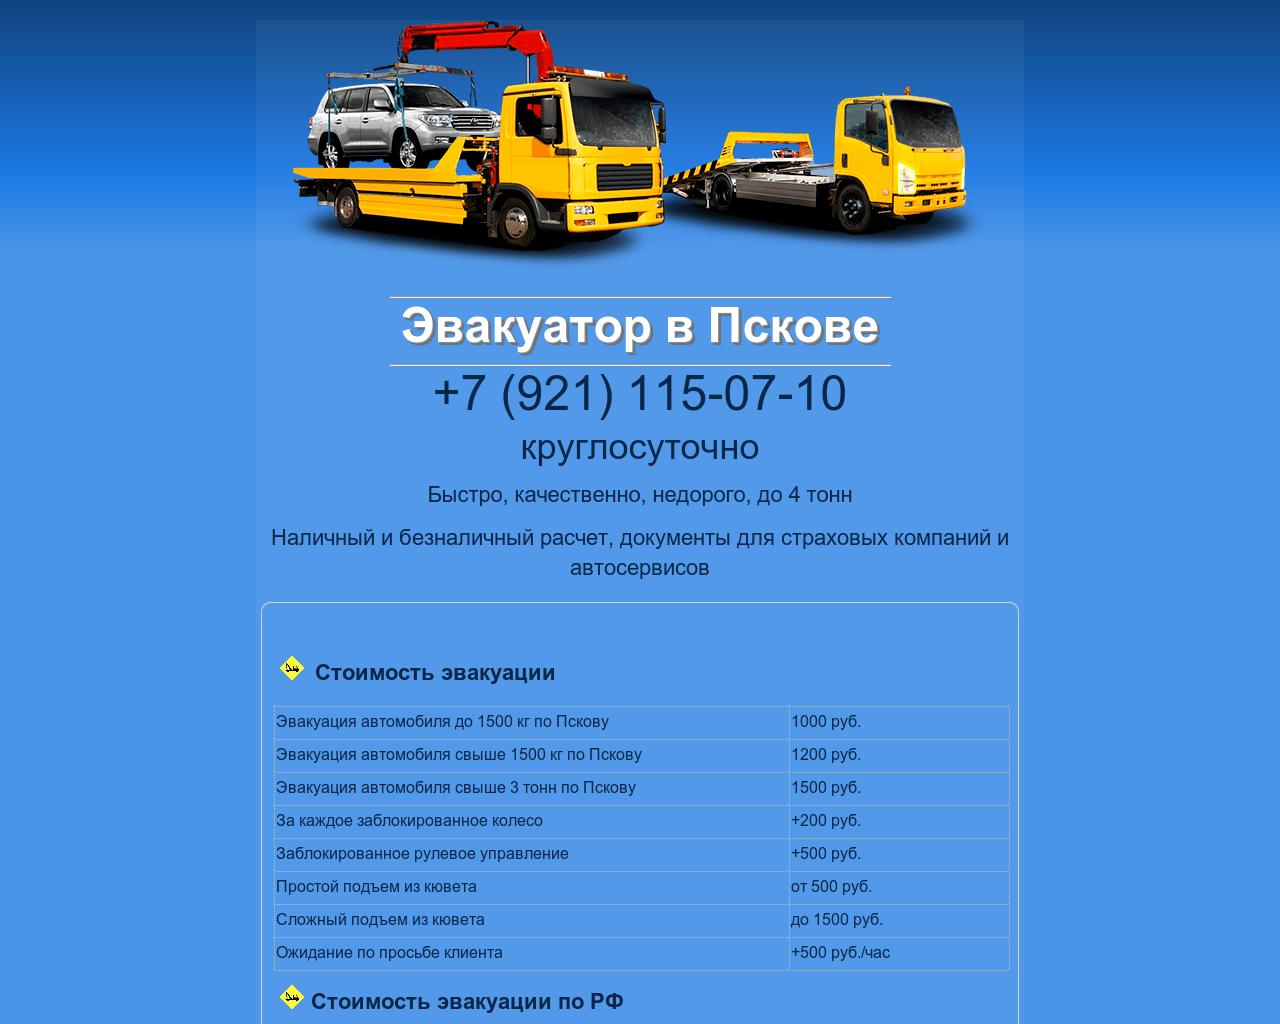 Изображение сайта evakuator-60.ru в разрешении 1280x1024